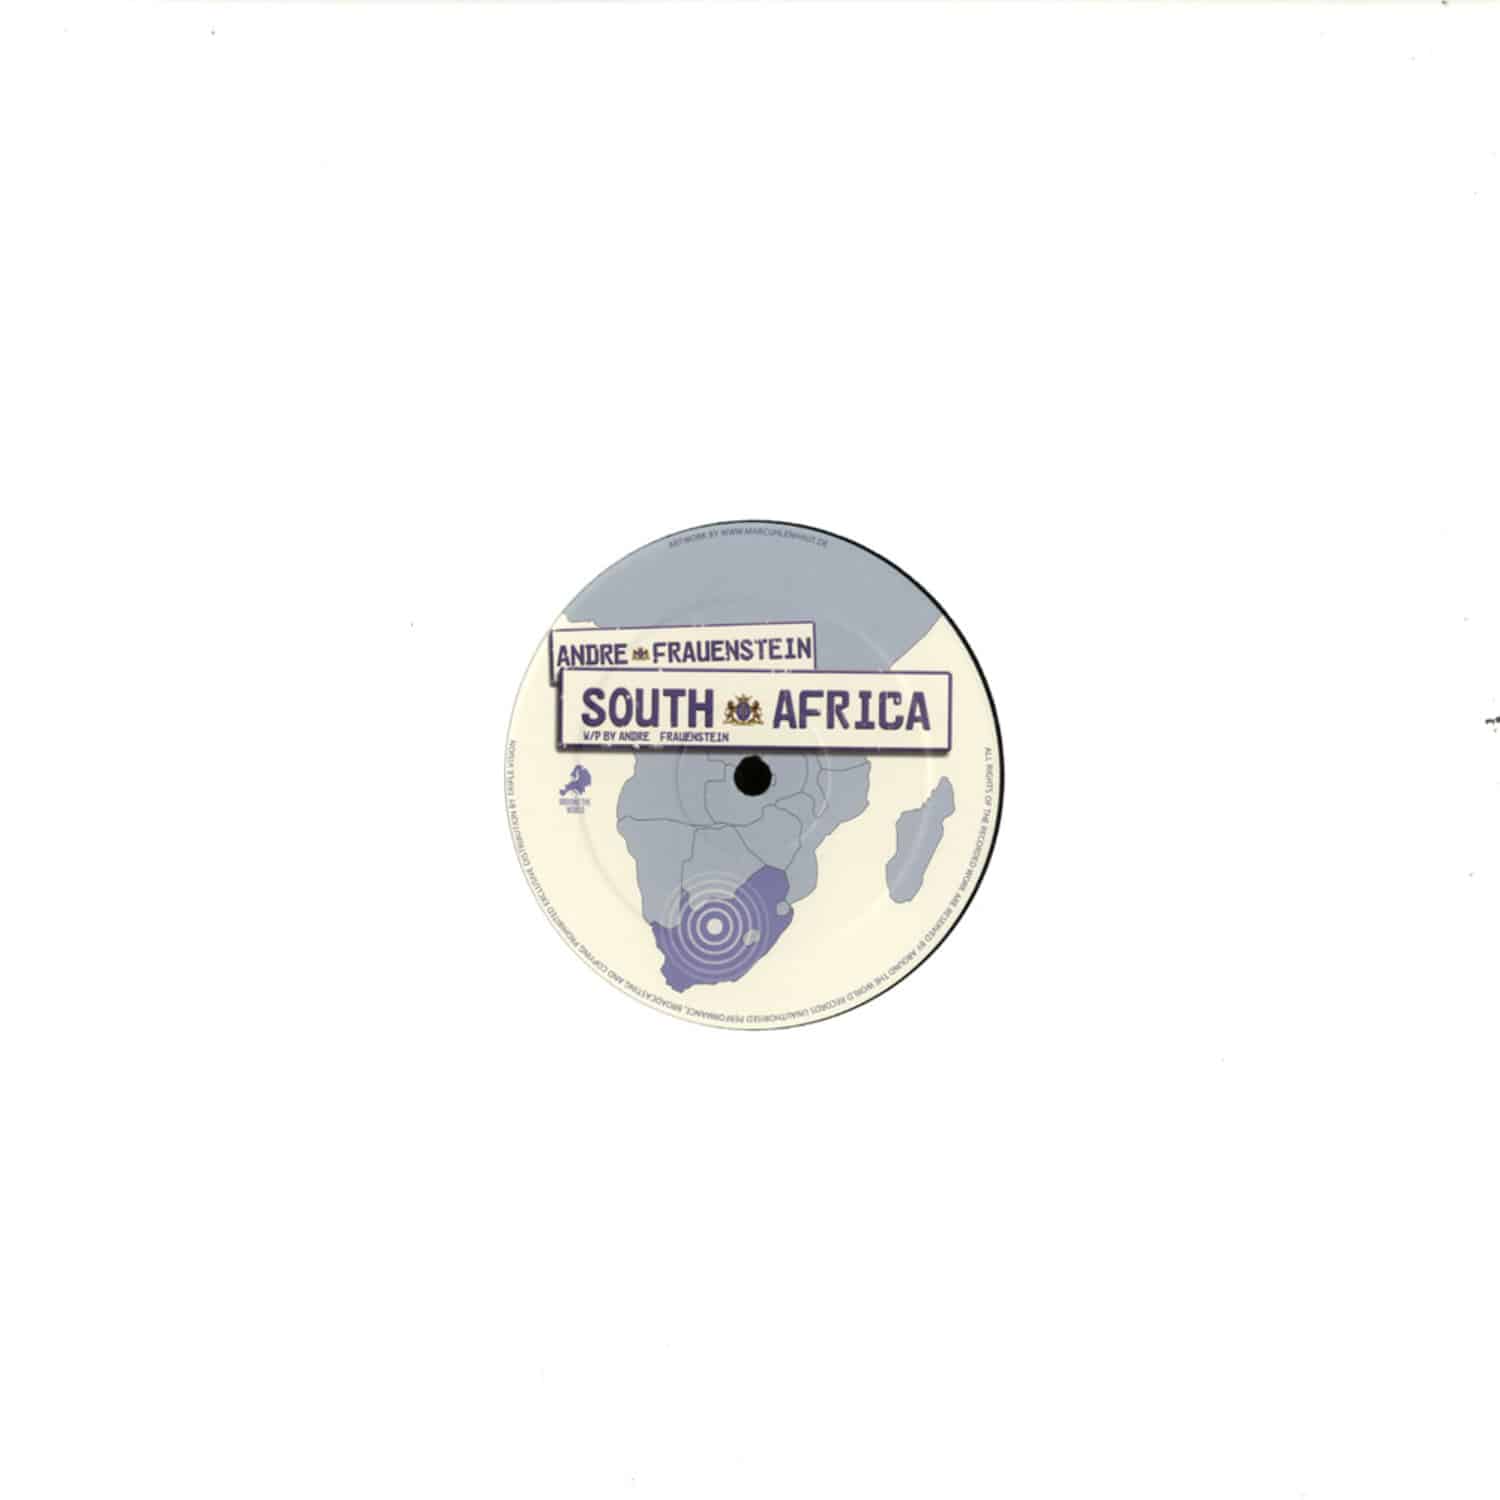 Mario Ranieri / Andre Frauenstein - AUSTRIA / SOUTH AFRICA